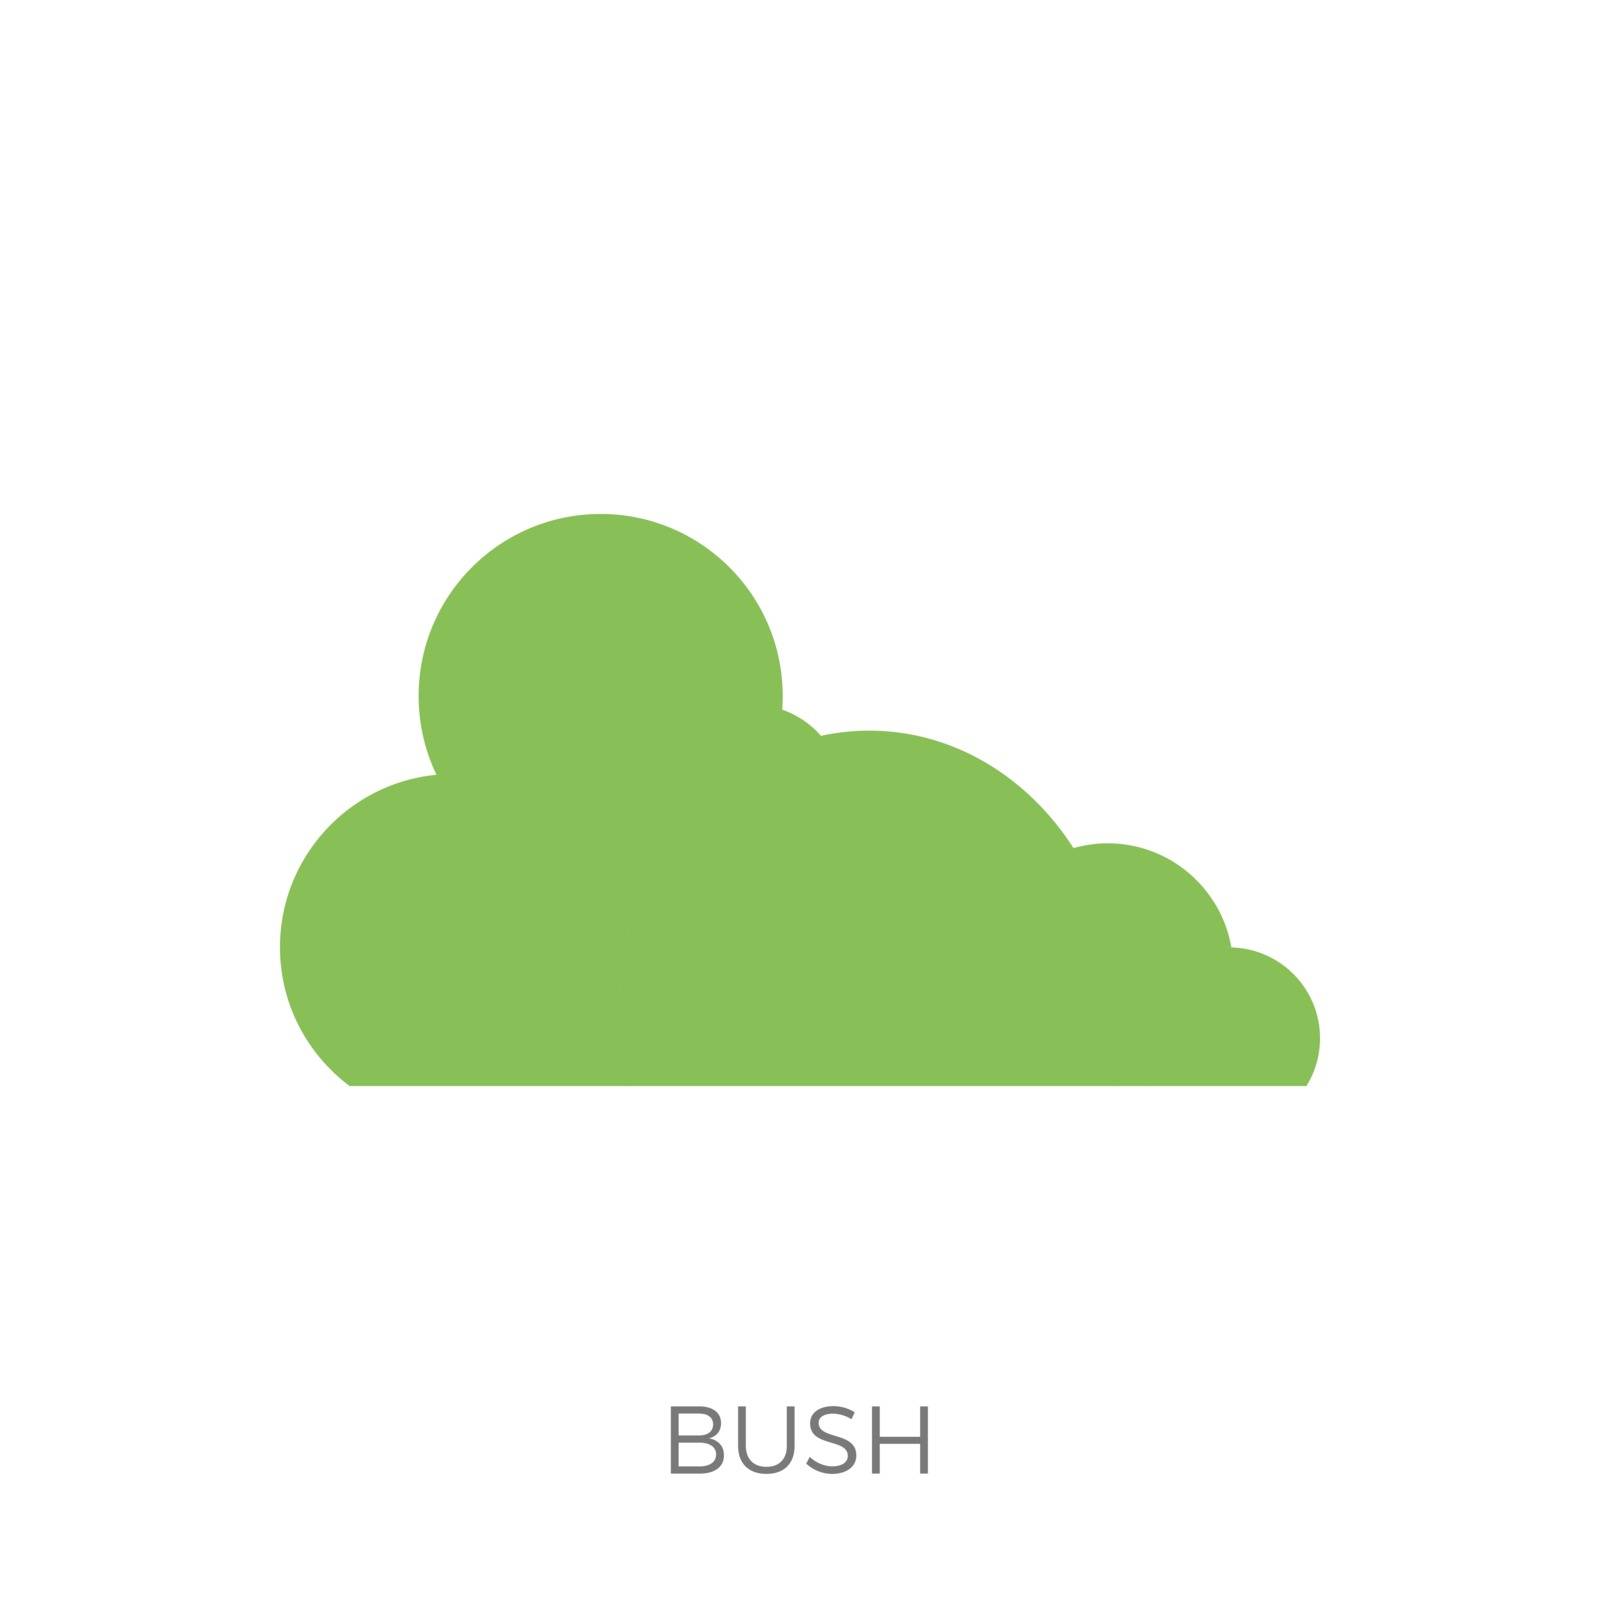 Bush Icon Vector. Isolated on White Background. Trendy Flat Style.